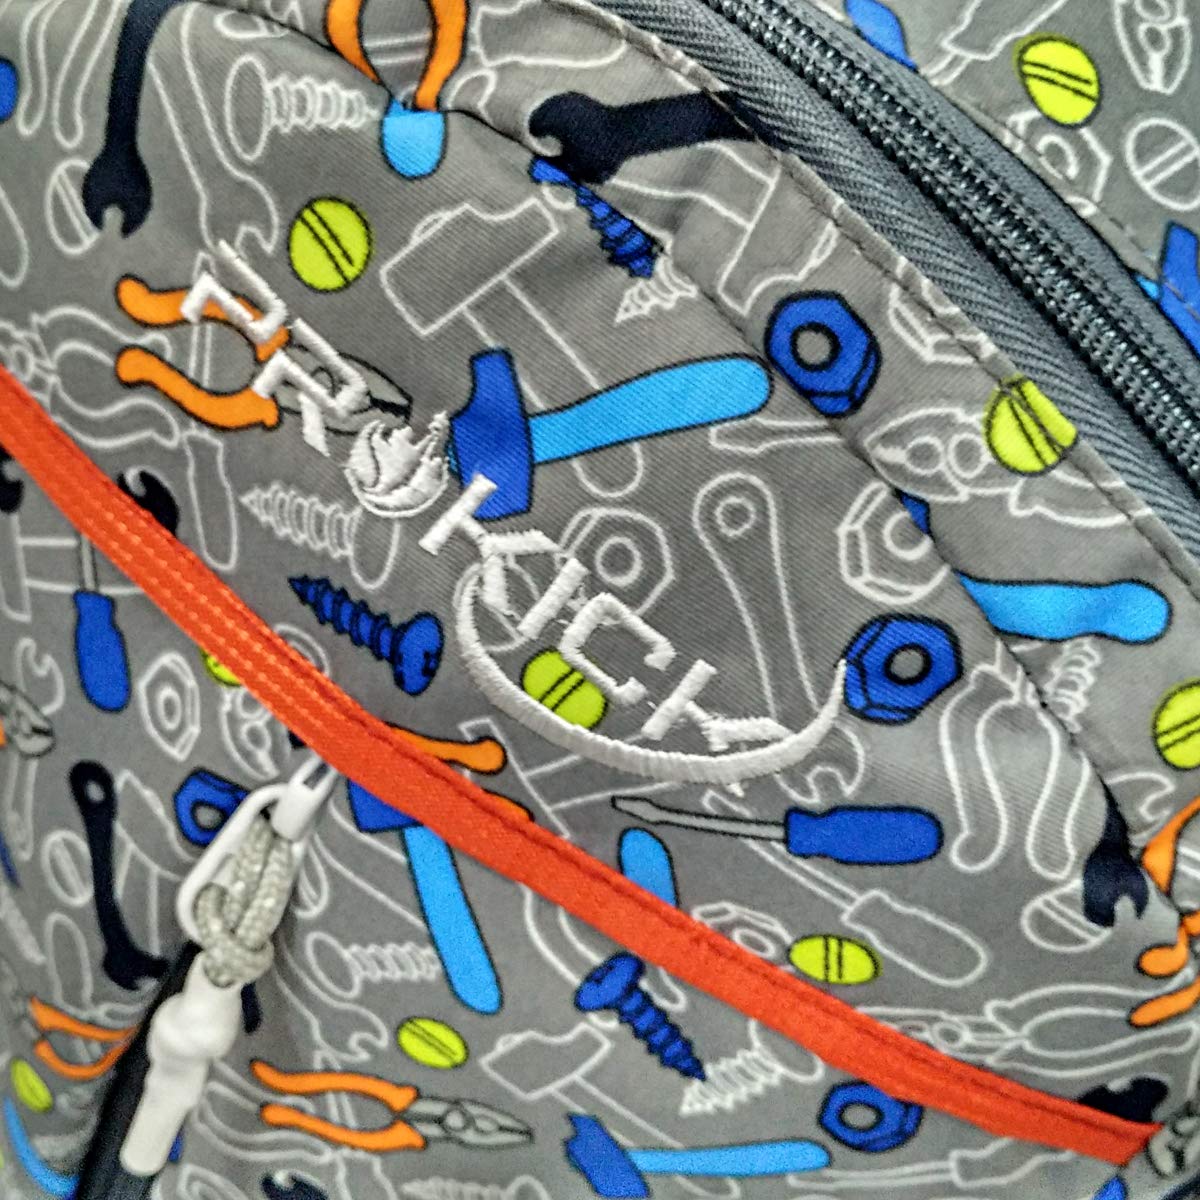 Prokick 30L Waterproof Casual Backpack | School Bag - Grey Tools - Best Price online Prokicksports.com